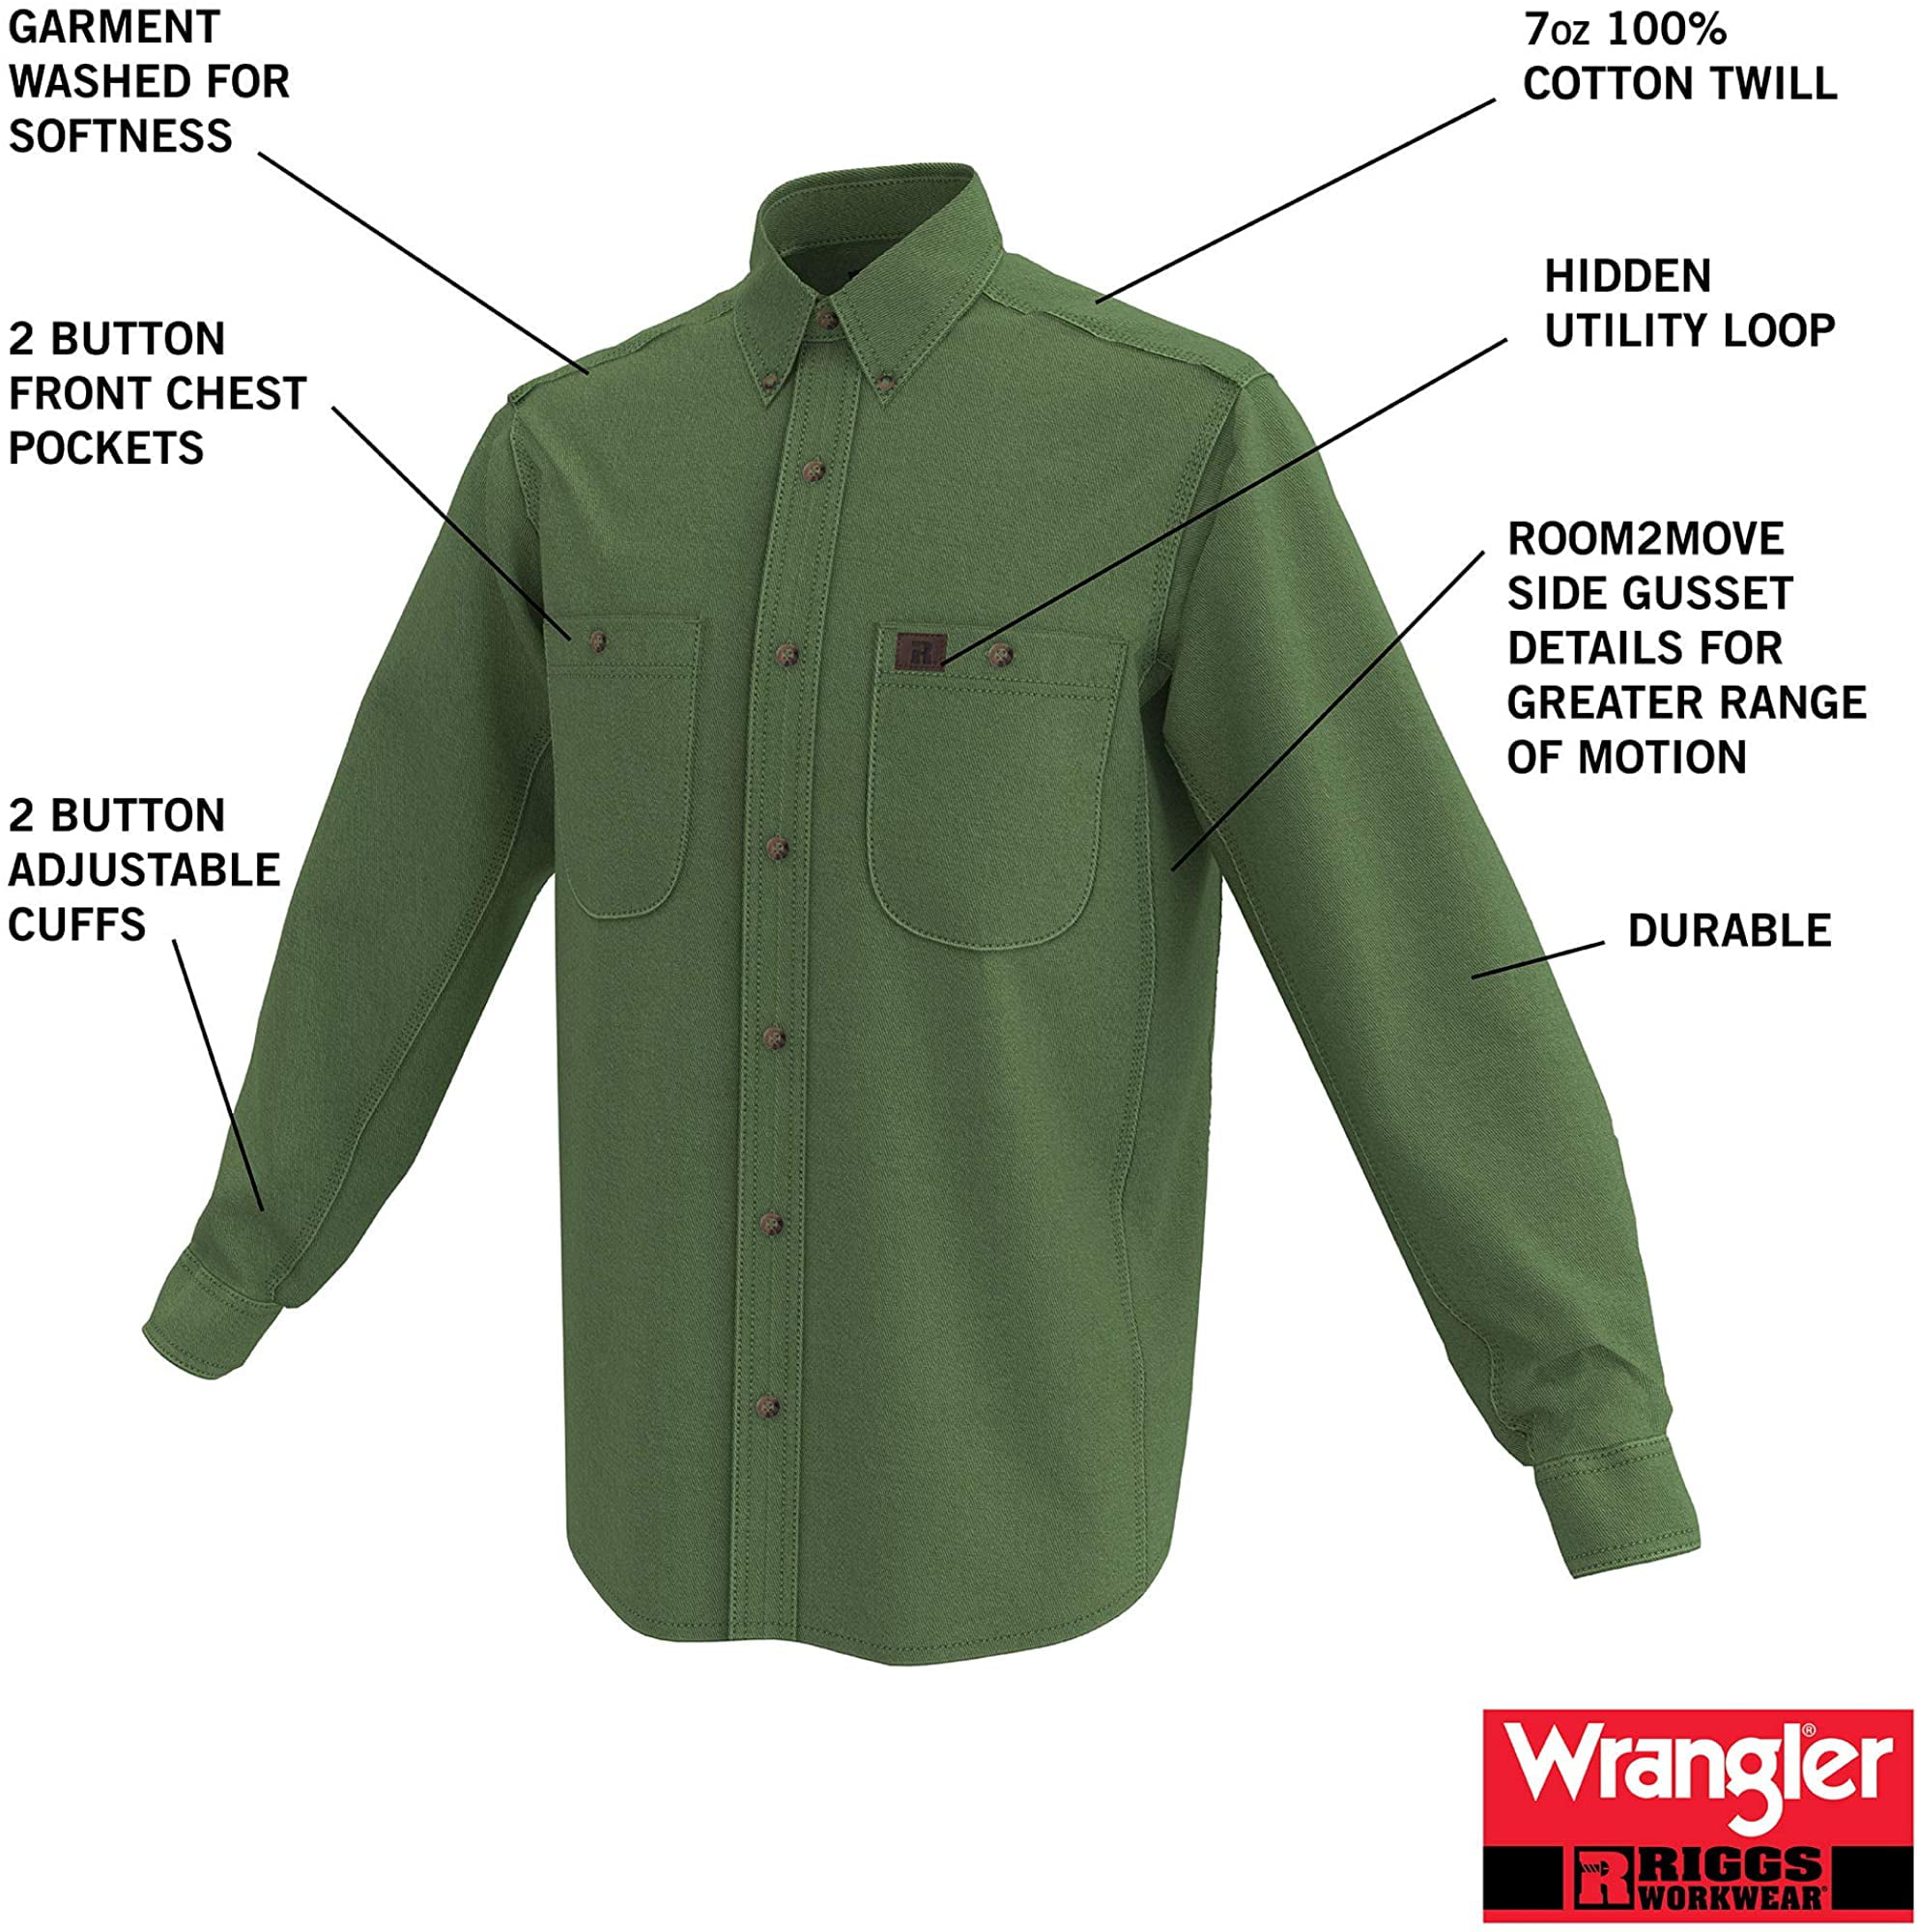 Wrangler Riggs Workwear Mens Logger Shirt